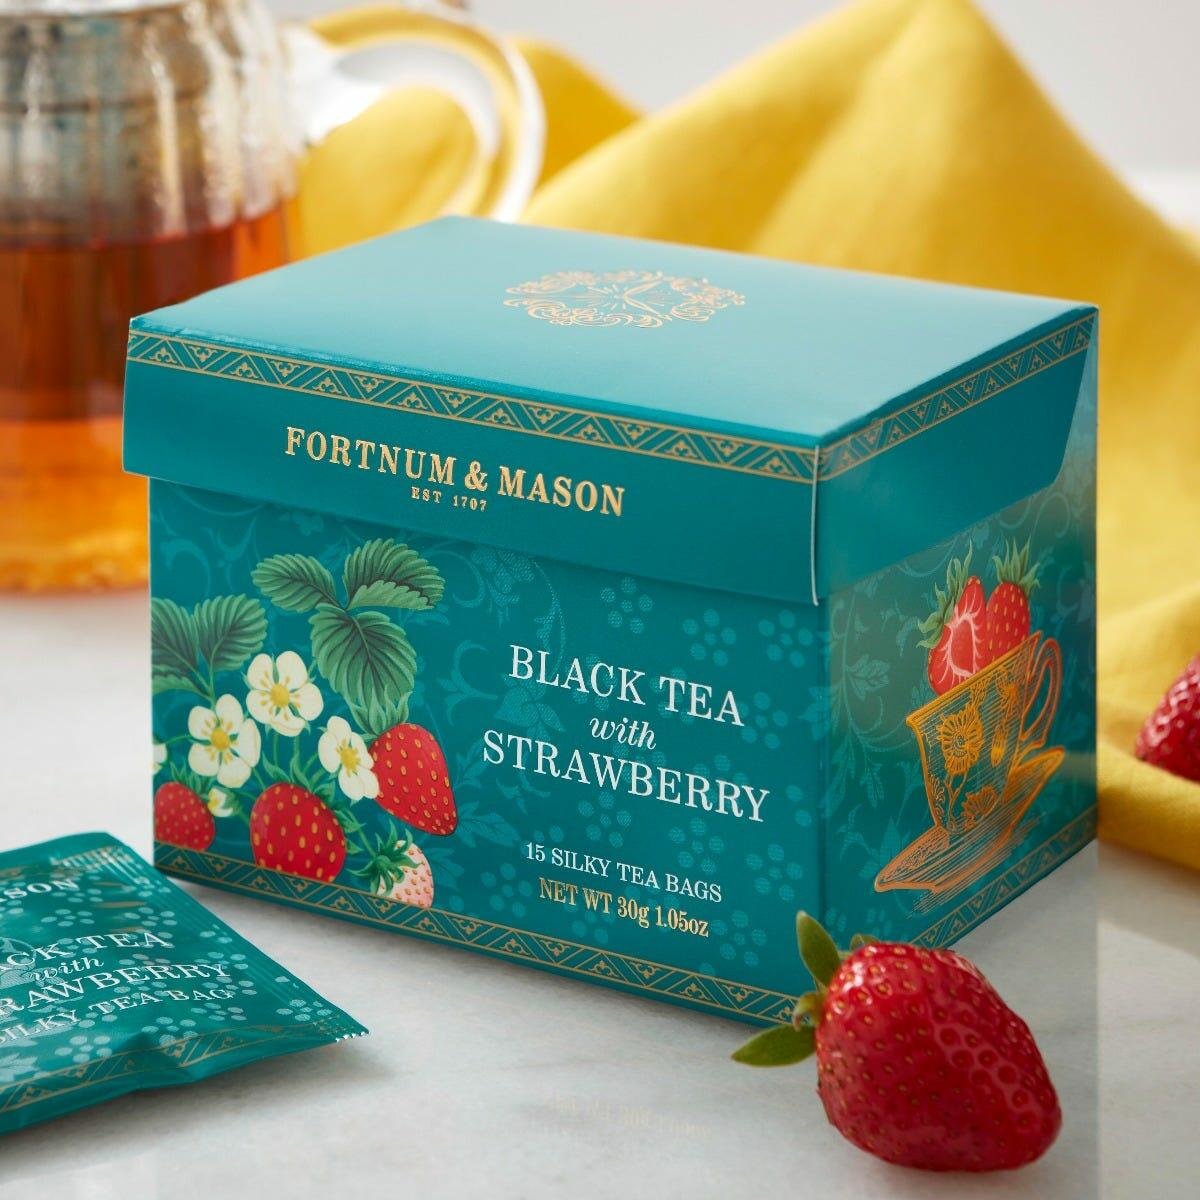 Fortnum & Mason Black Tea With Strawberry, 15 Silky Tea Bags, 30G